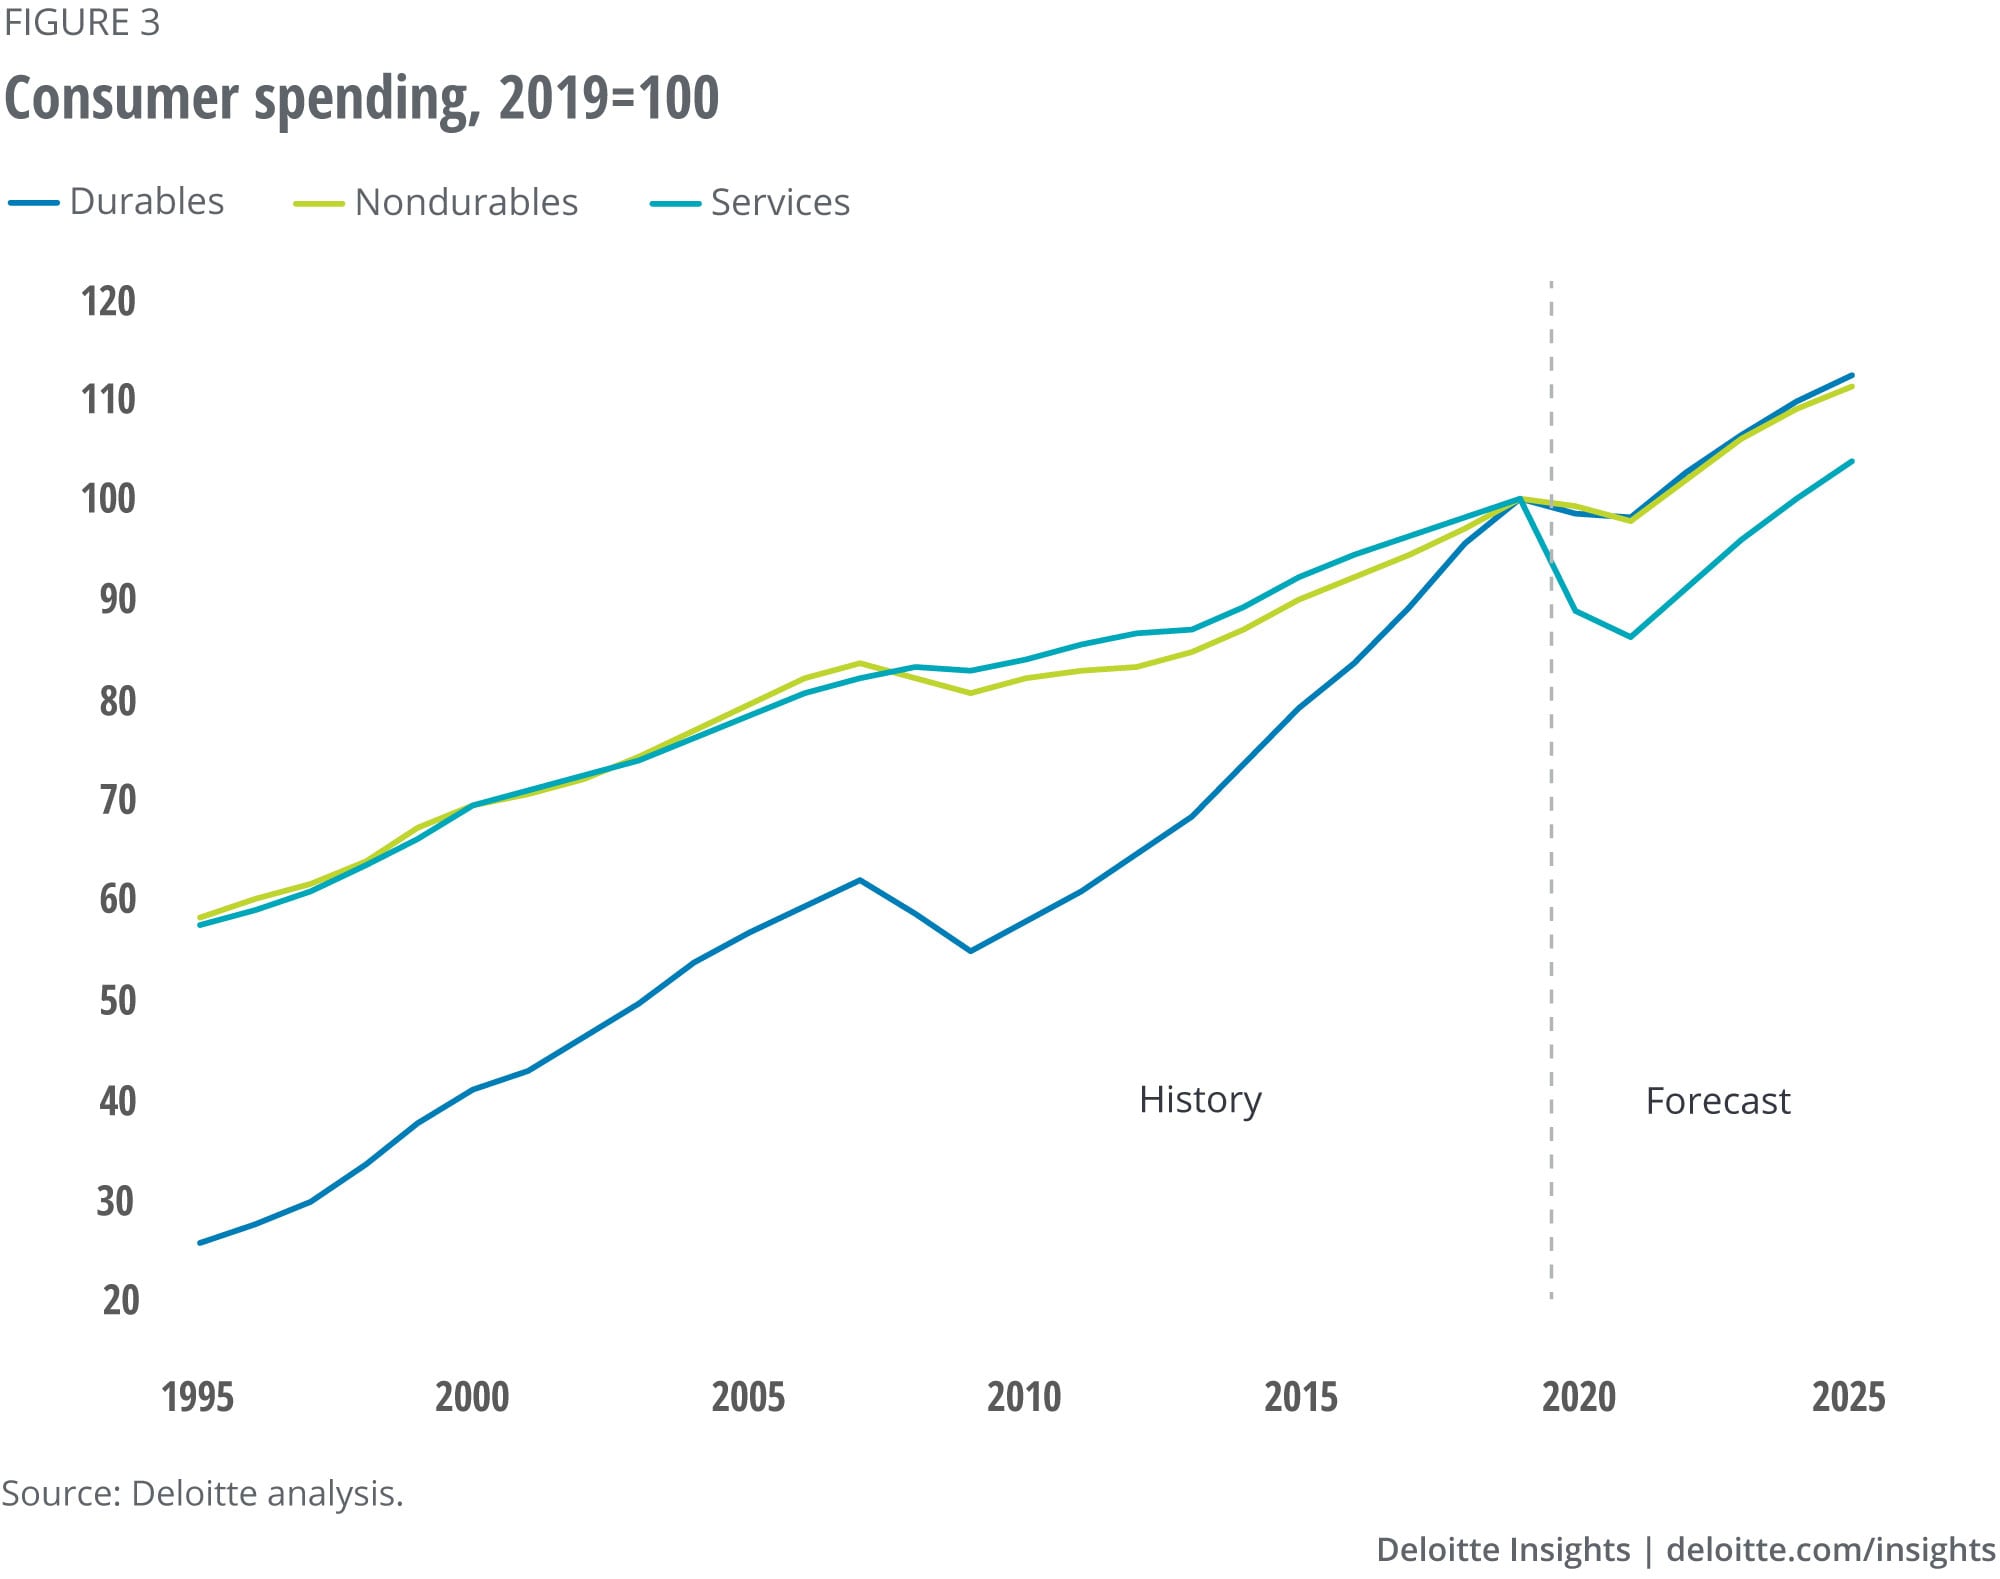 Consumer spending growth